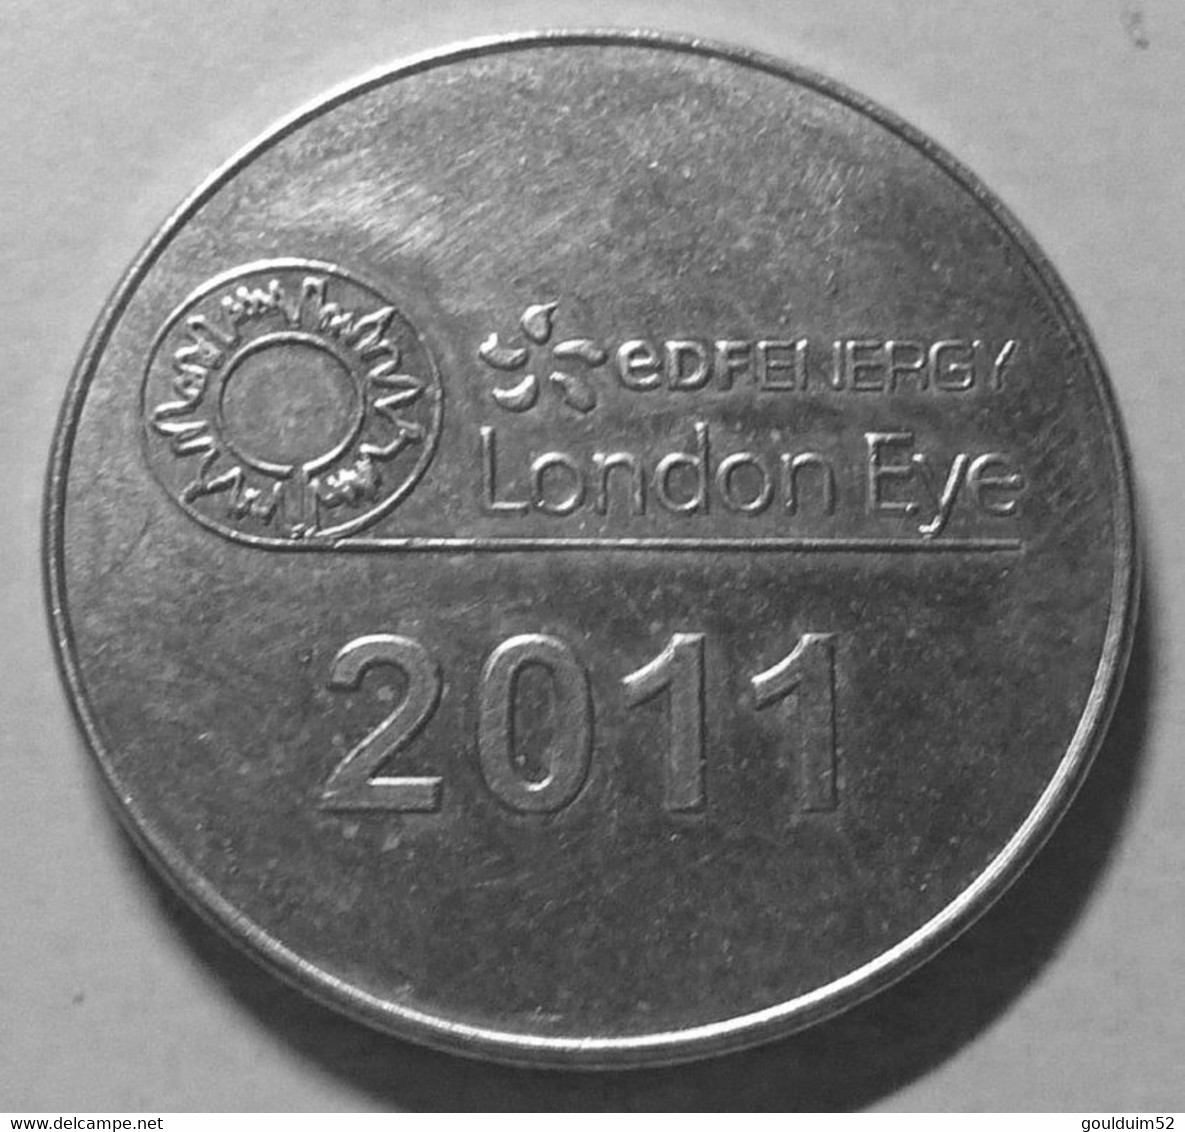 EDF Energy London Eye 2011 - Firma's